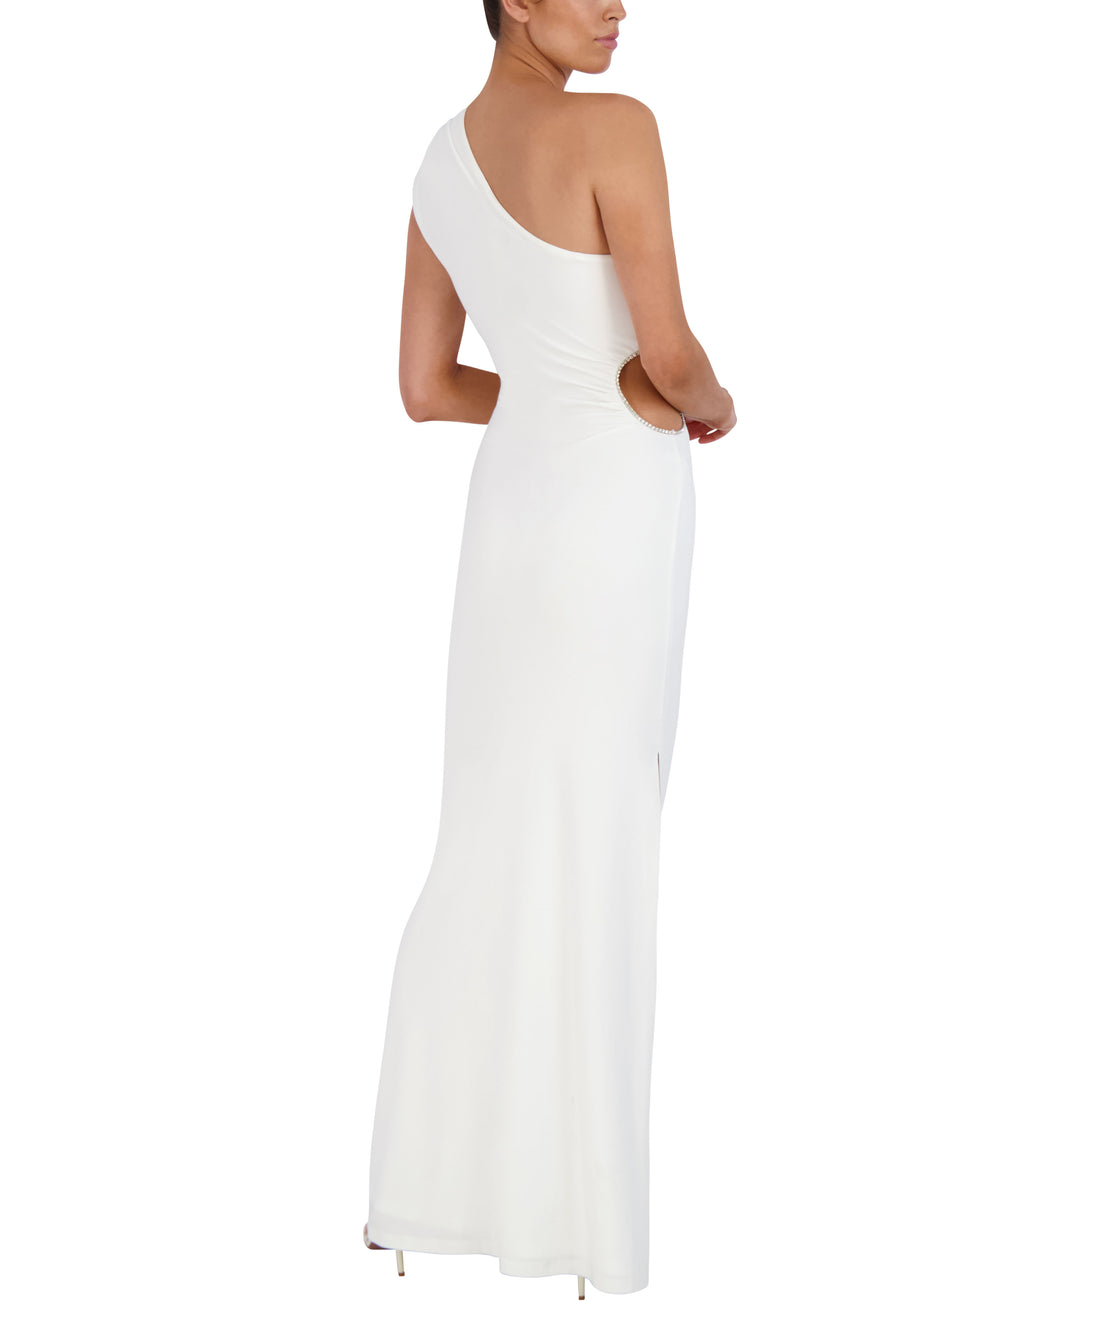 white-assymmetric-neck-long-dress-with-side-slit_mxx1d32_off-white_02